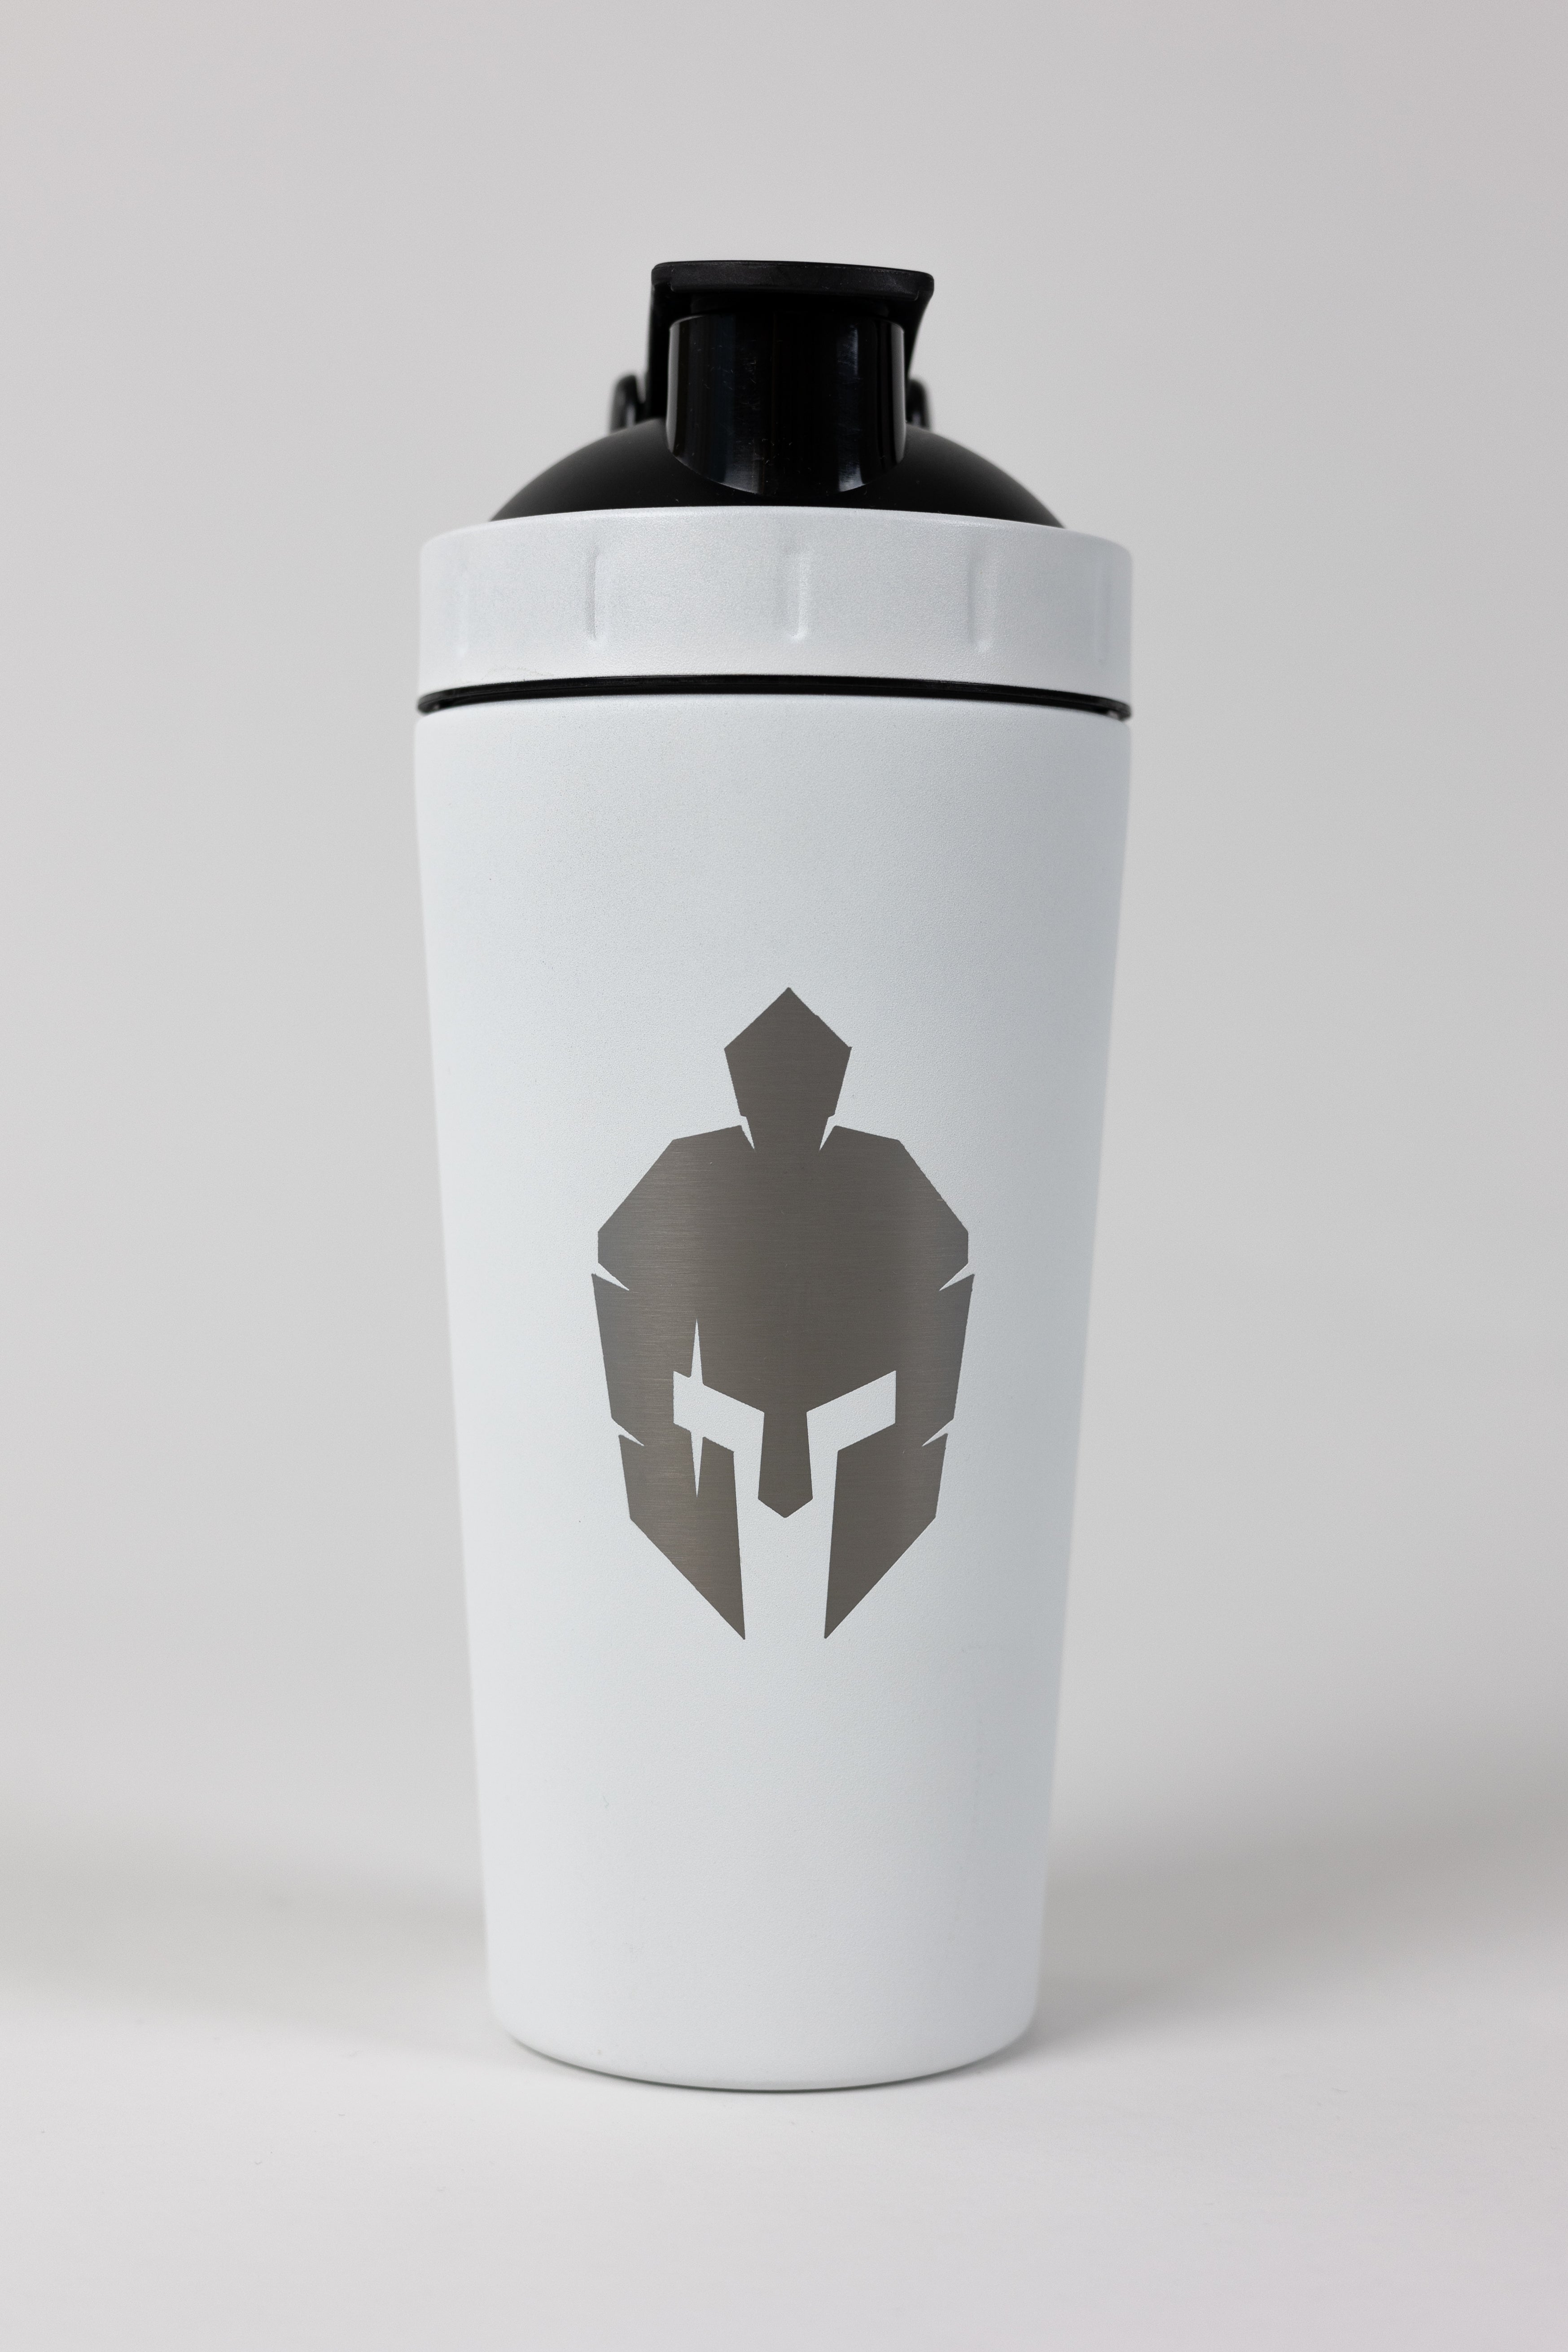 White metal protein shaker bottle with roman helmet logo on front